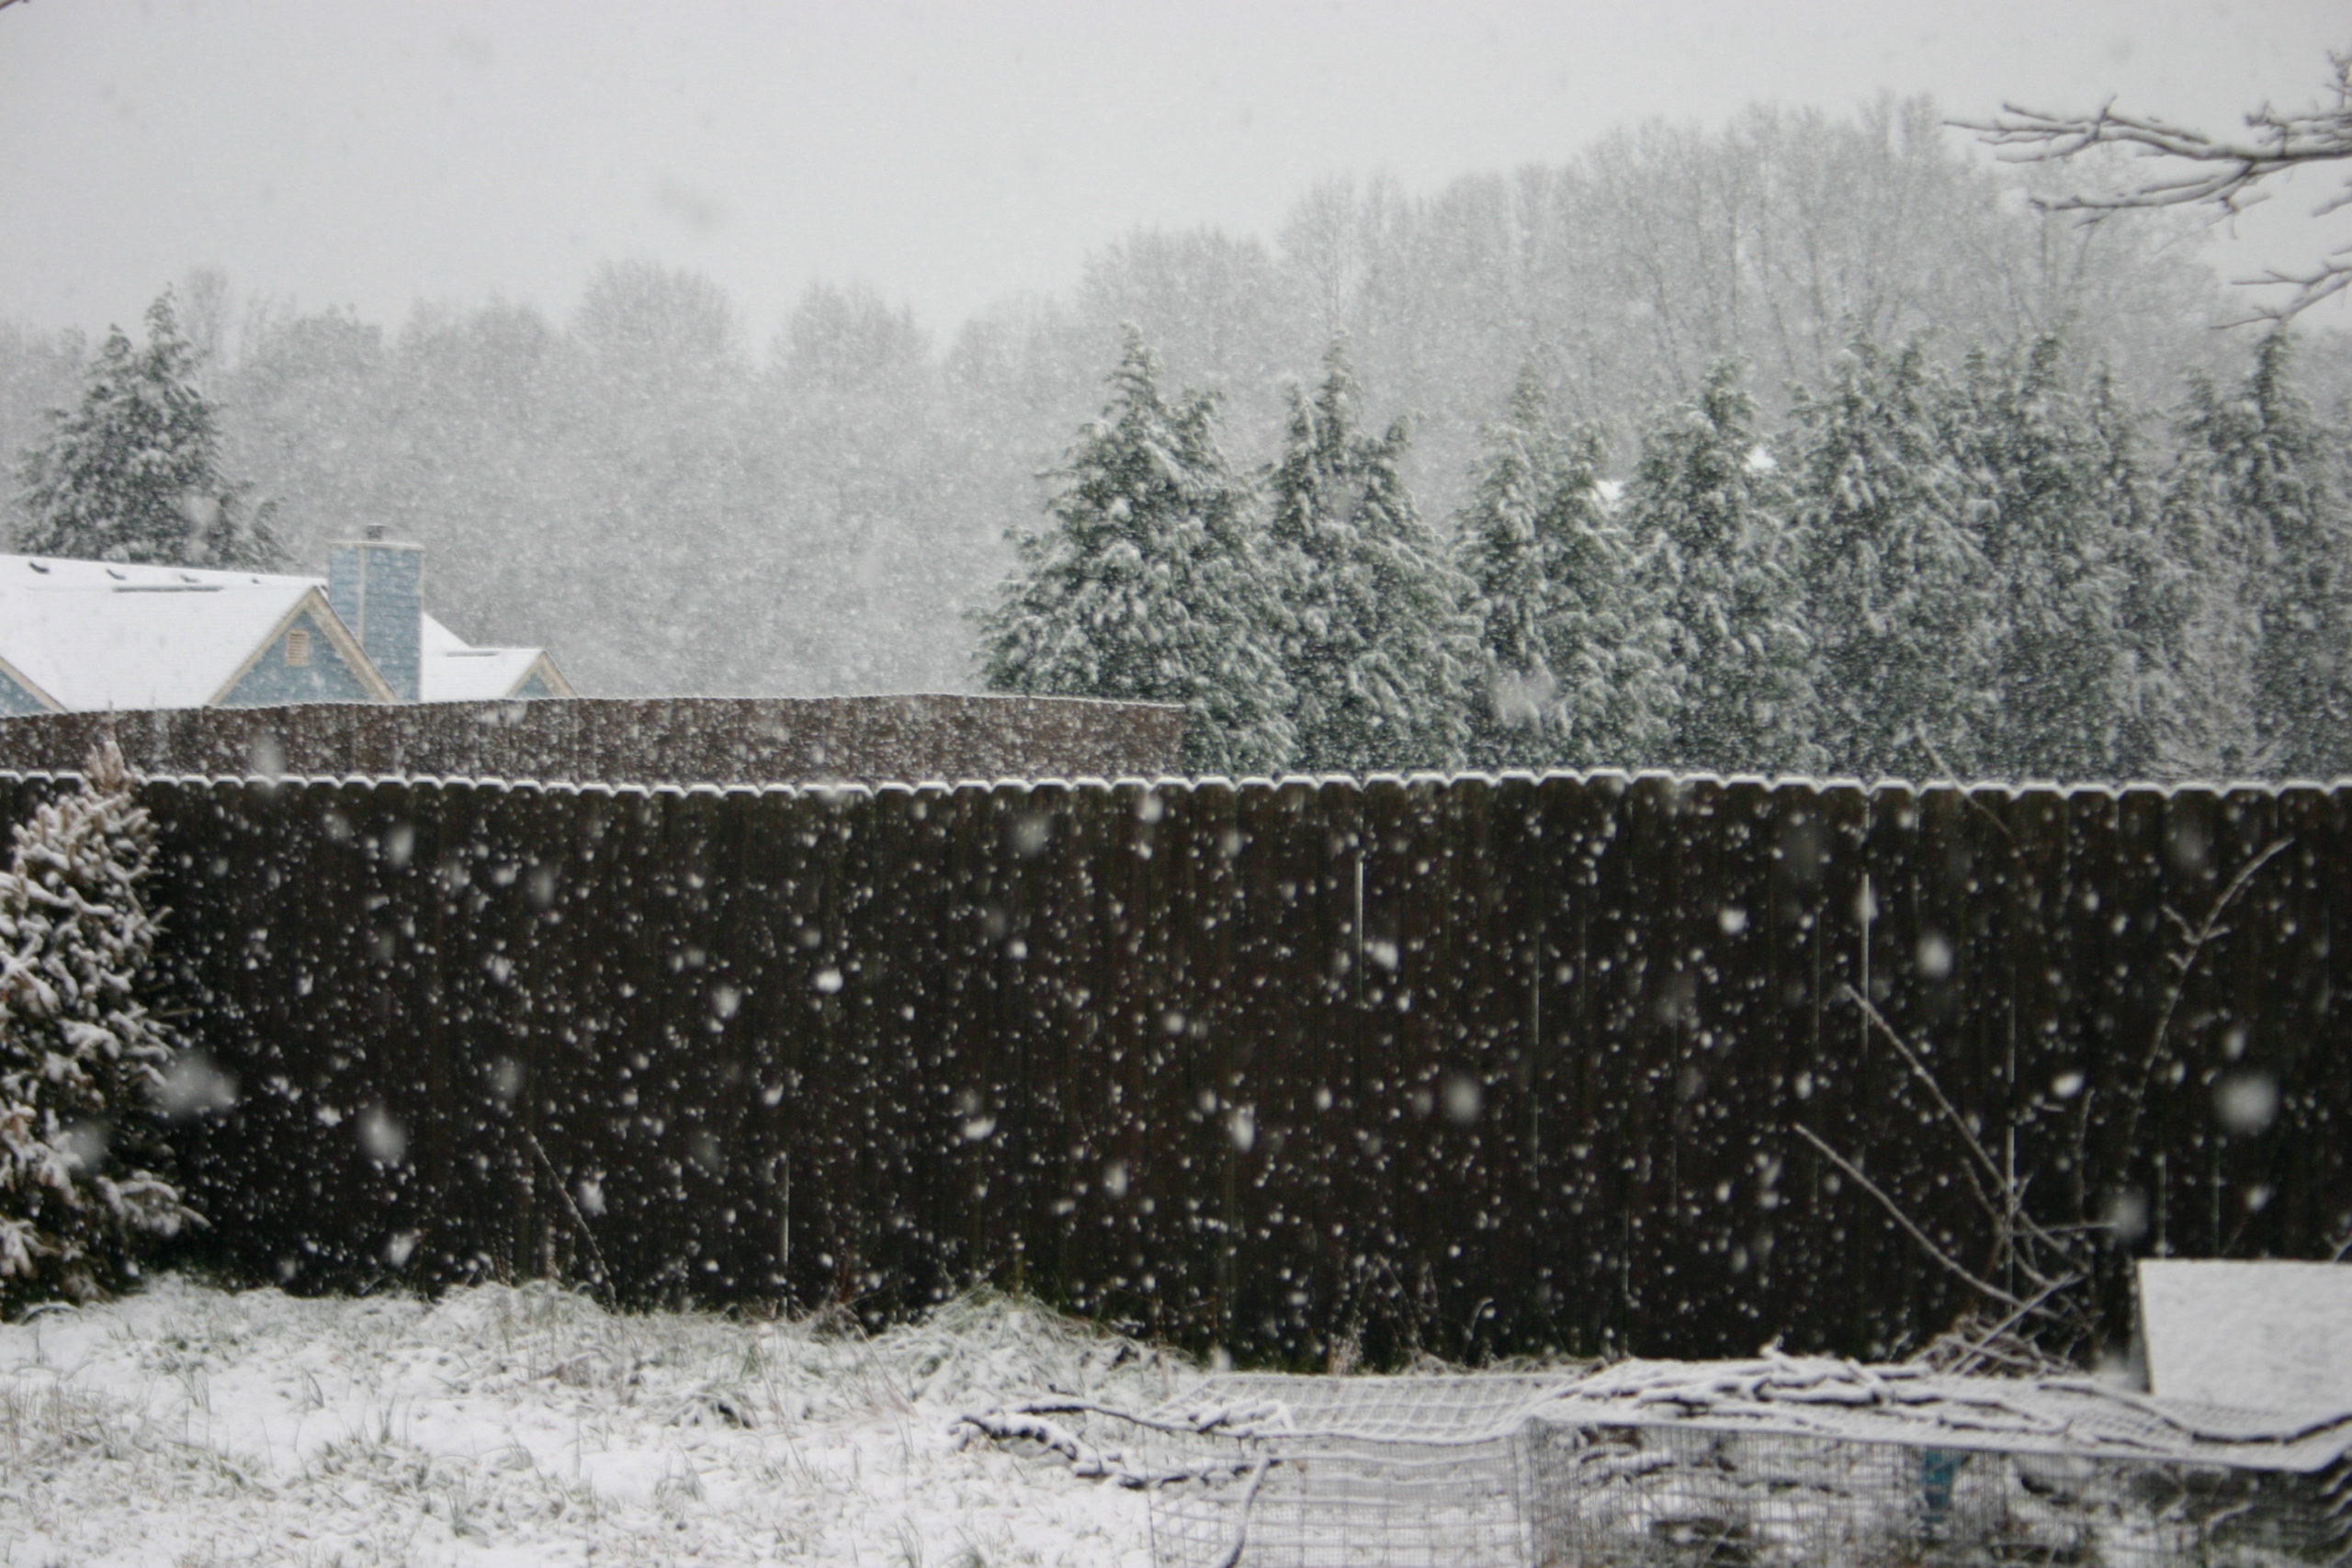 GA Snow in March 2009